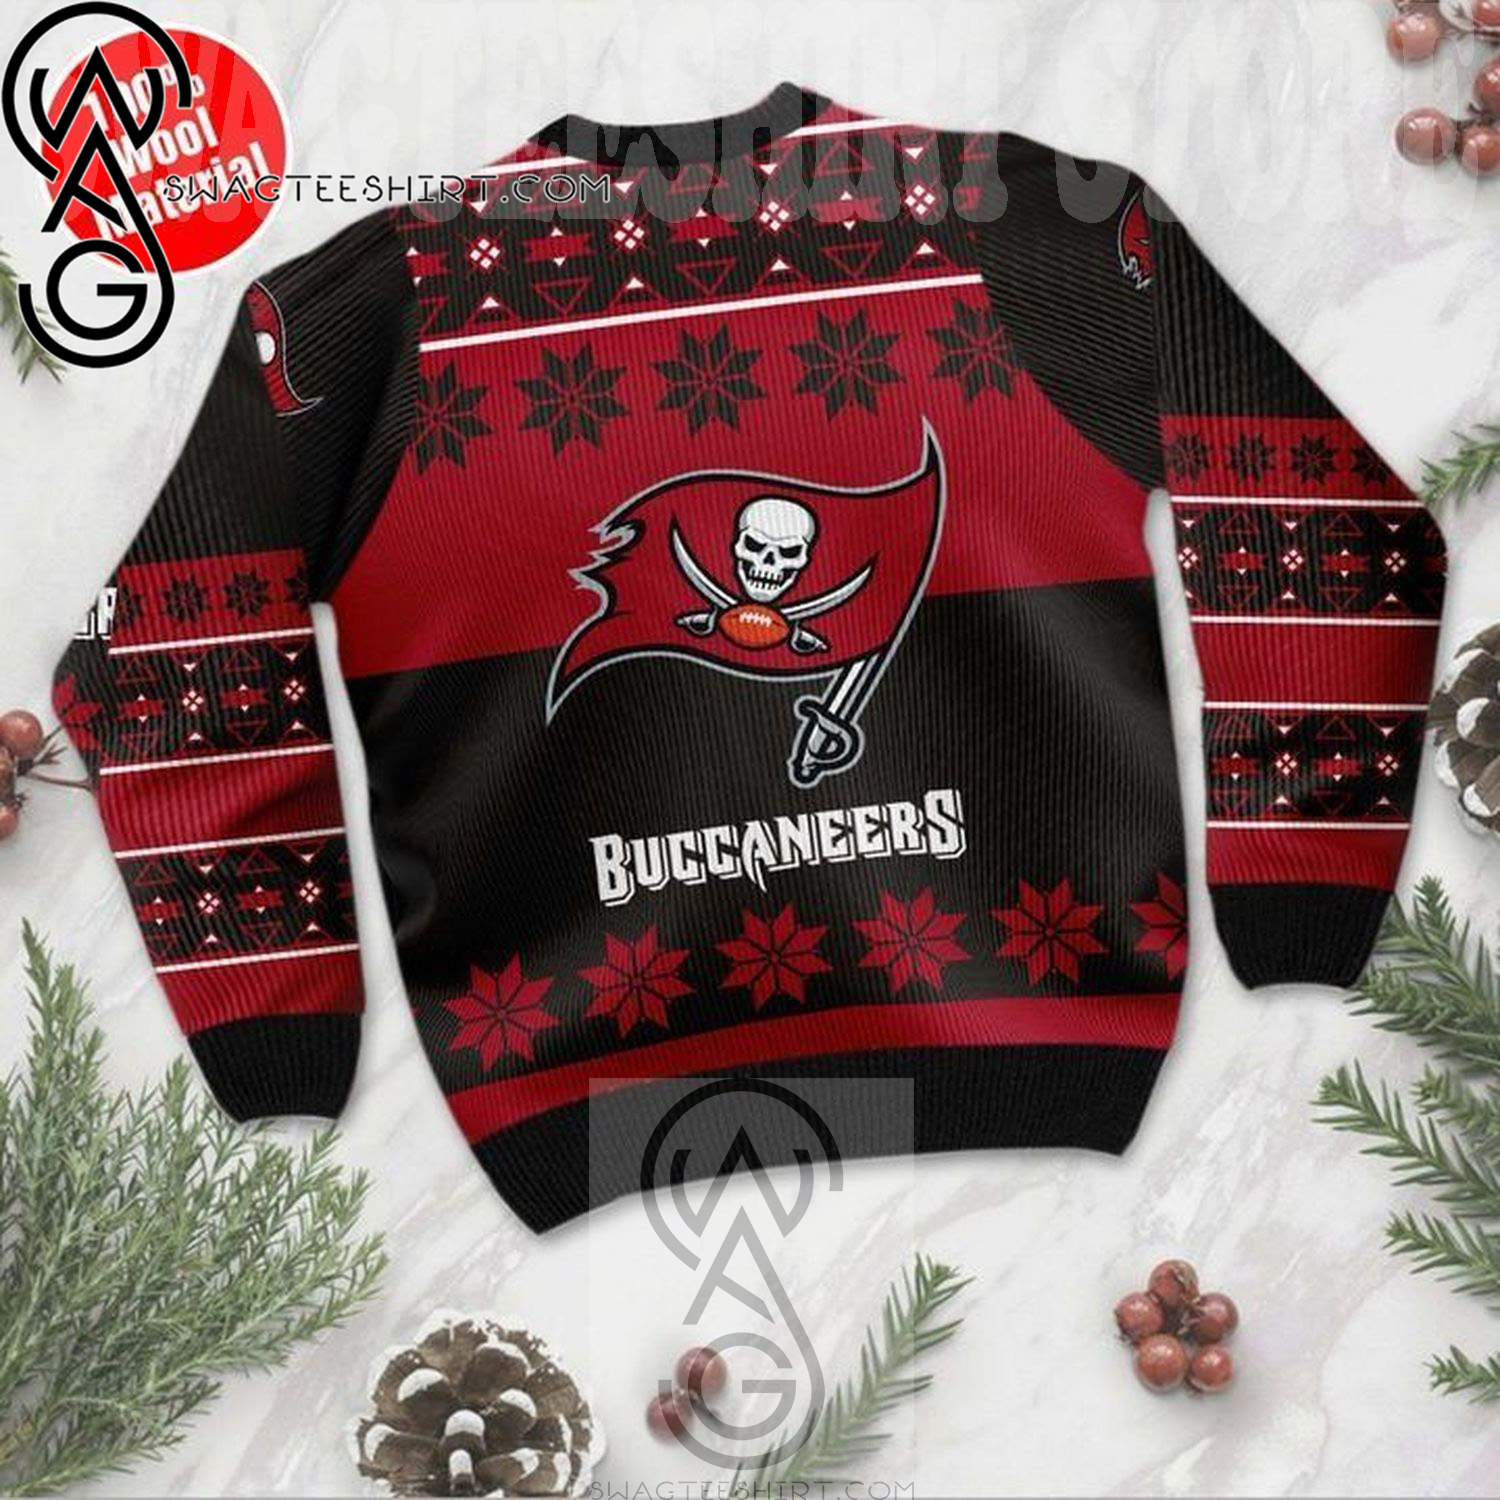 NHL Tampa Bay Lightning Santa Claus Snowman Ideas Logo Ugly Christmas  Sweater For Fans - Banantees